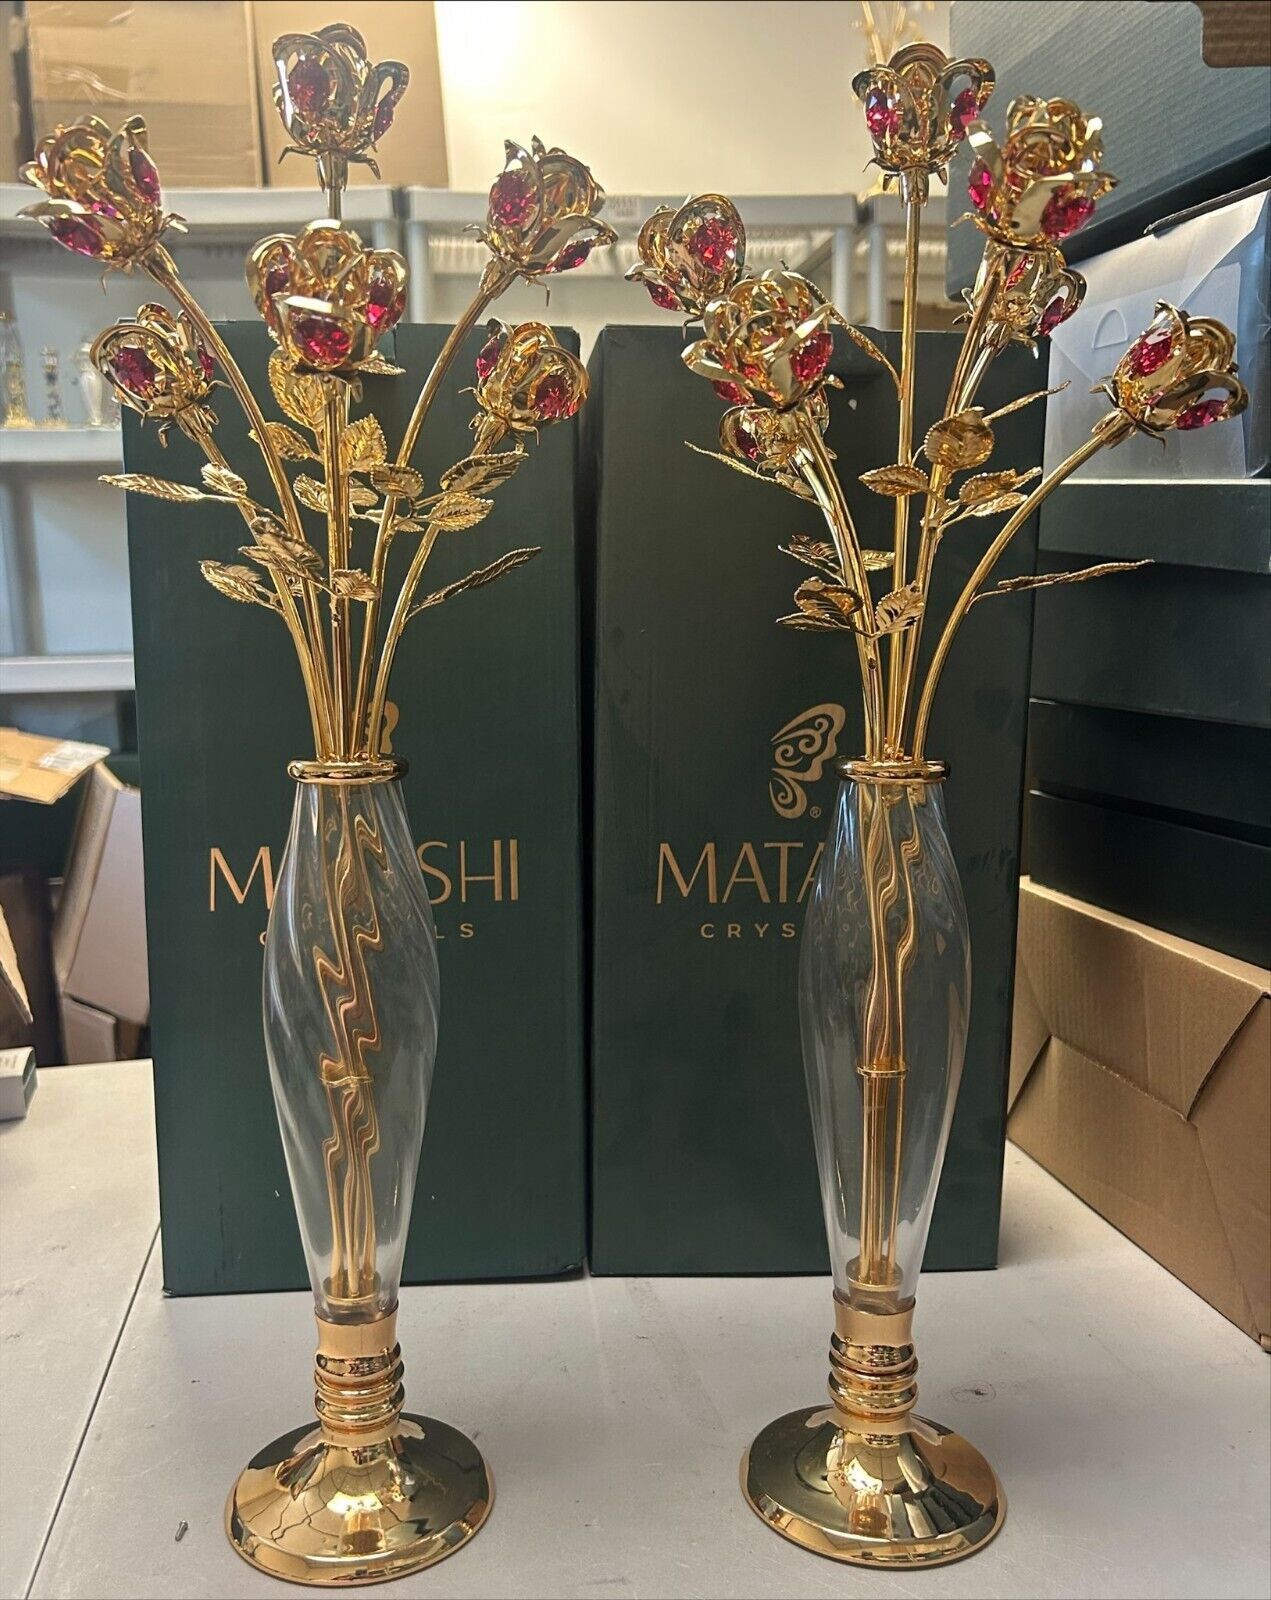 (Pack of 2) Matashi 24K Gold Dipped Crystal Studded Rose Bouquet in Elegant Vase